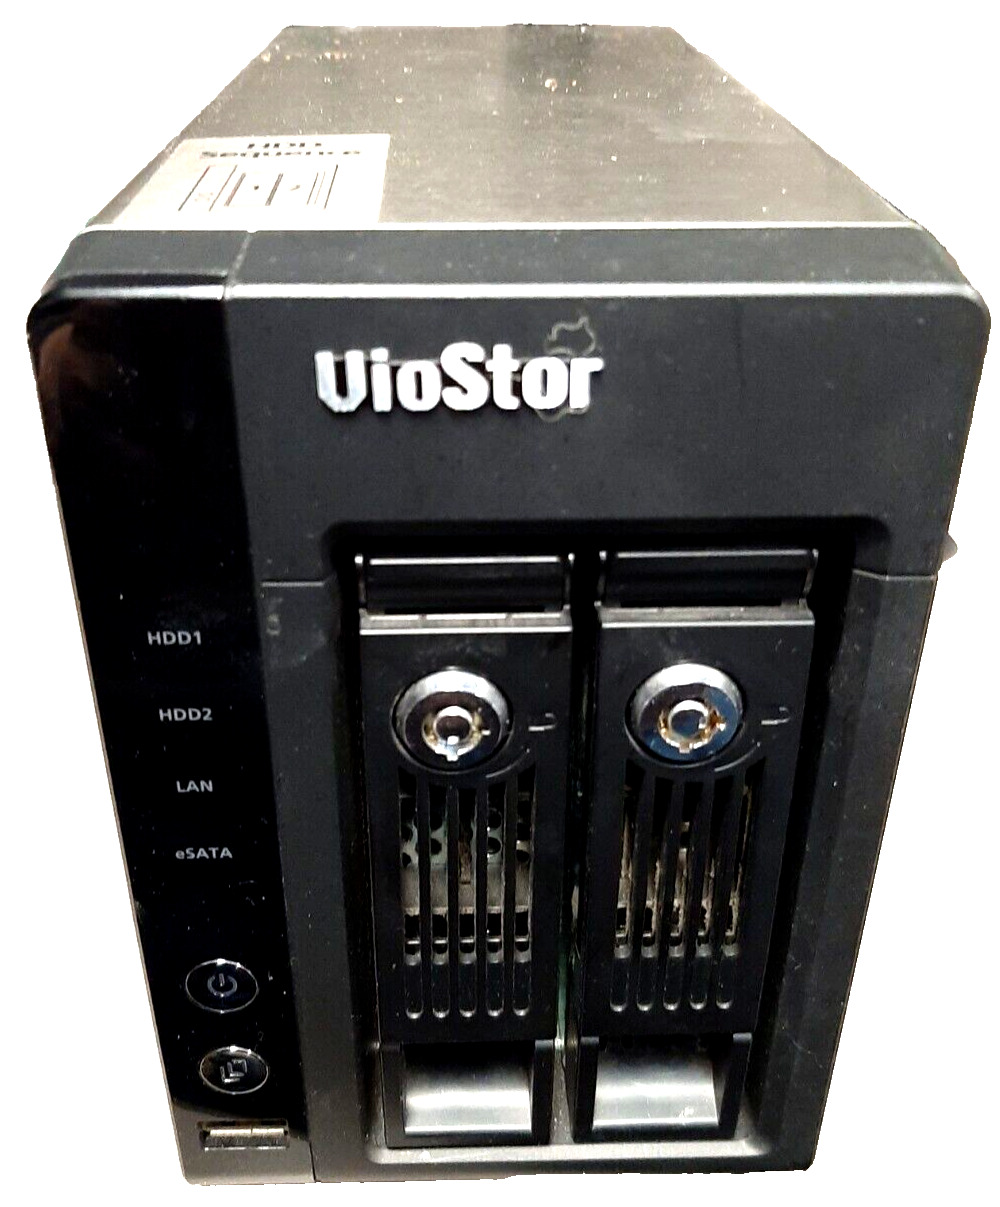 QNAP VioStor VS-2008 Network Video Recorder No Hard Drives (Office B-D04)